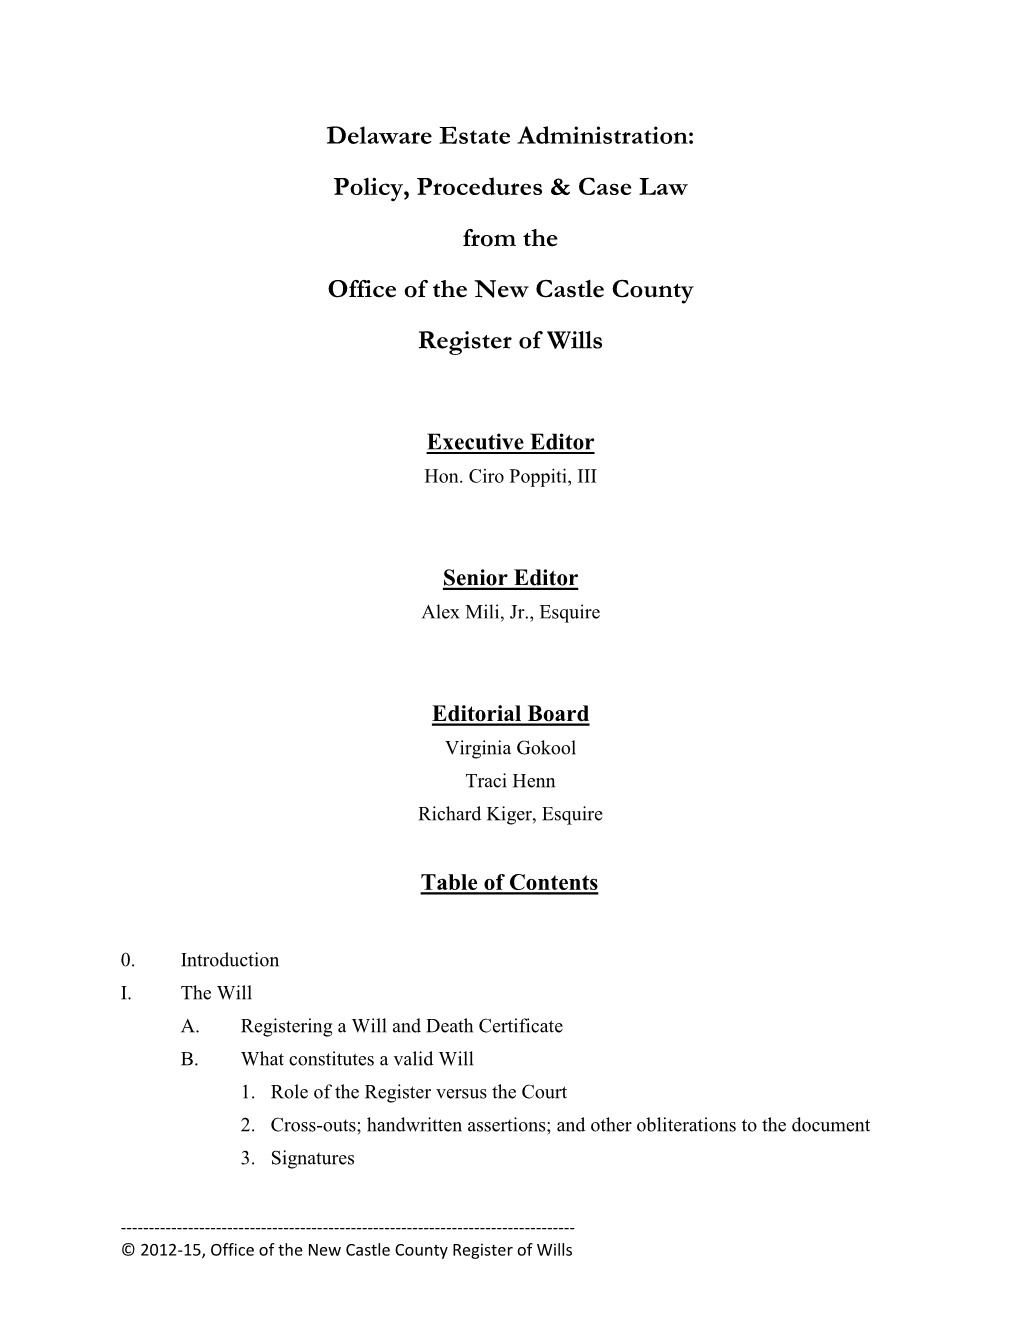 Delaware Estate Administration: Policy, Procedures & Case Law